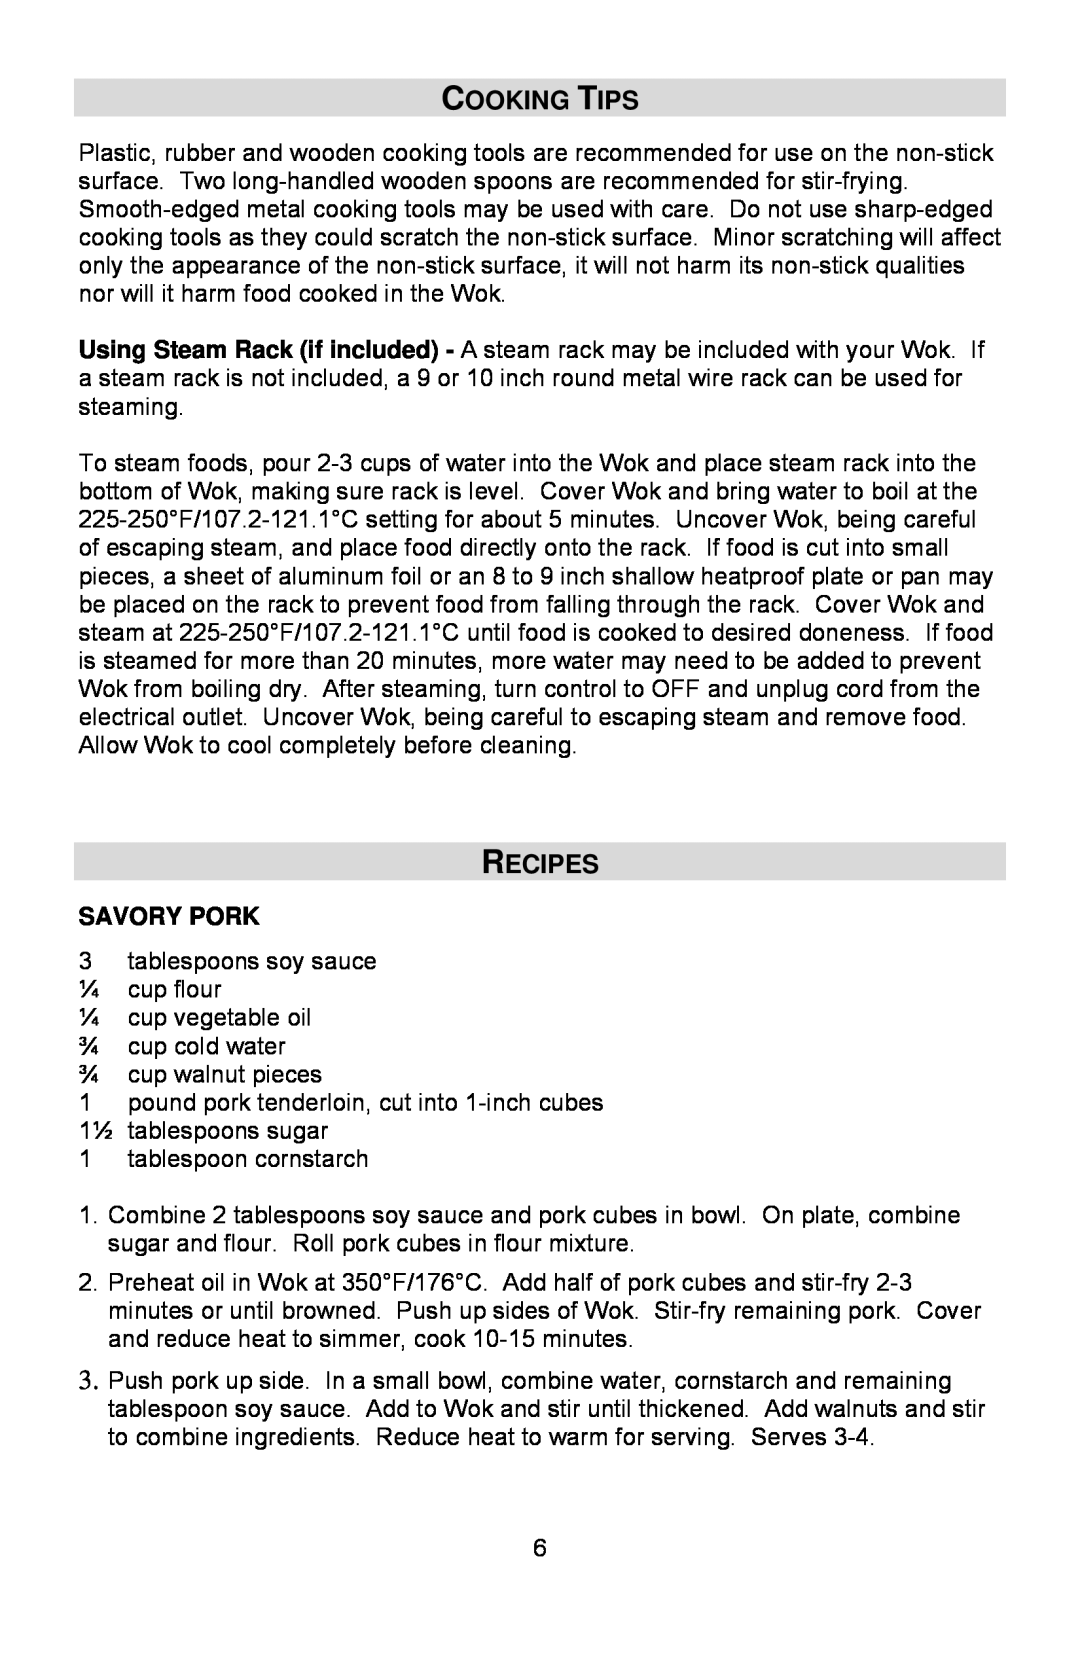 West Bend Housewares Electric Wok instruction manual Cooking Tips, Recipes, Savory Pork 